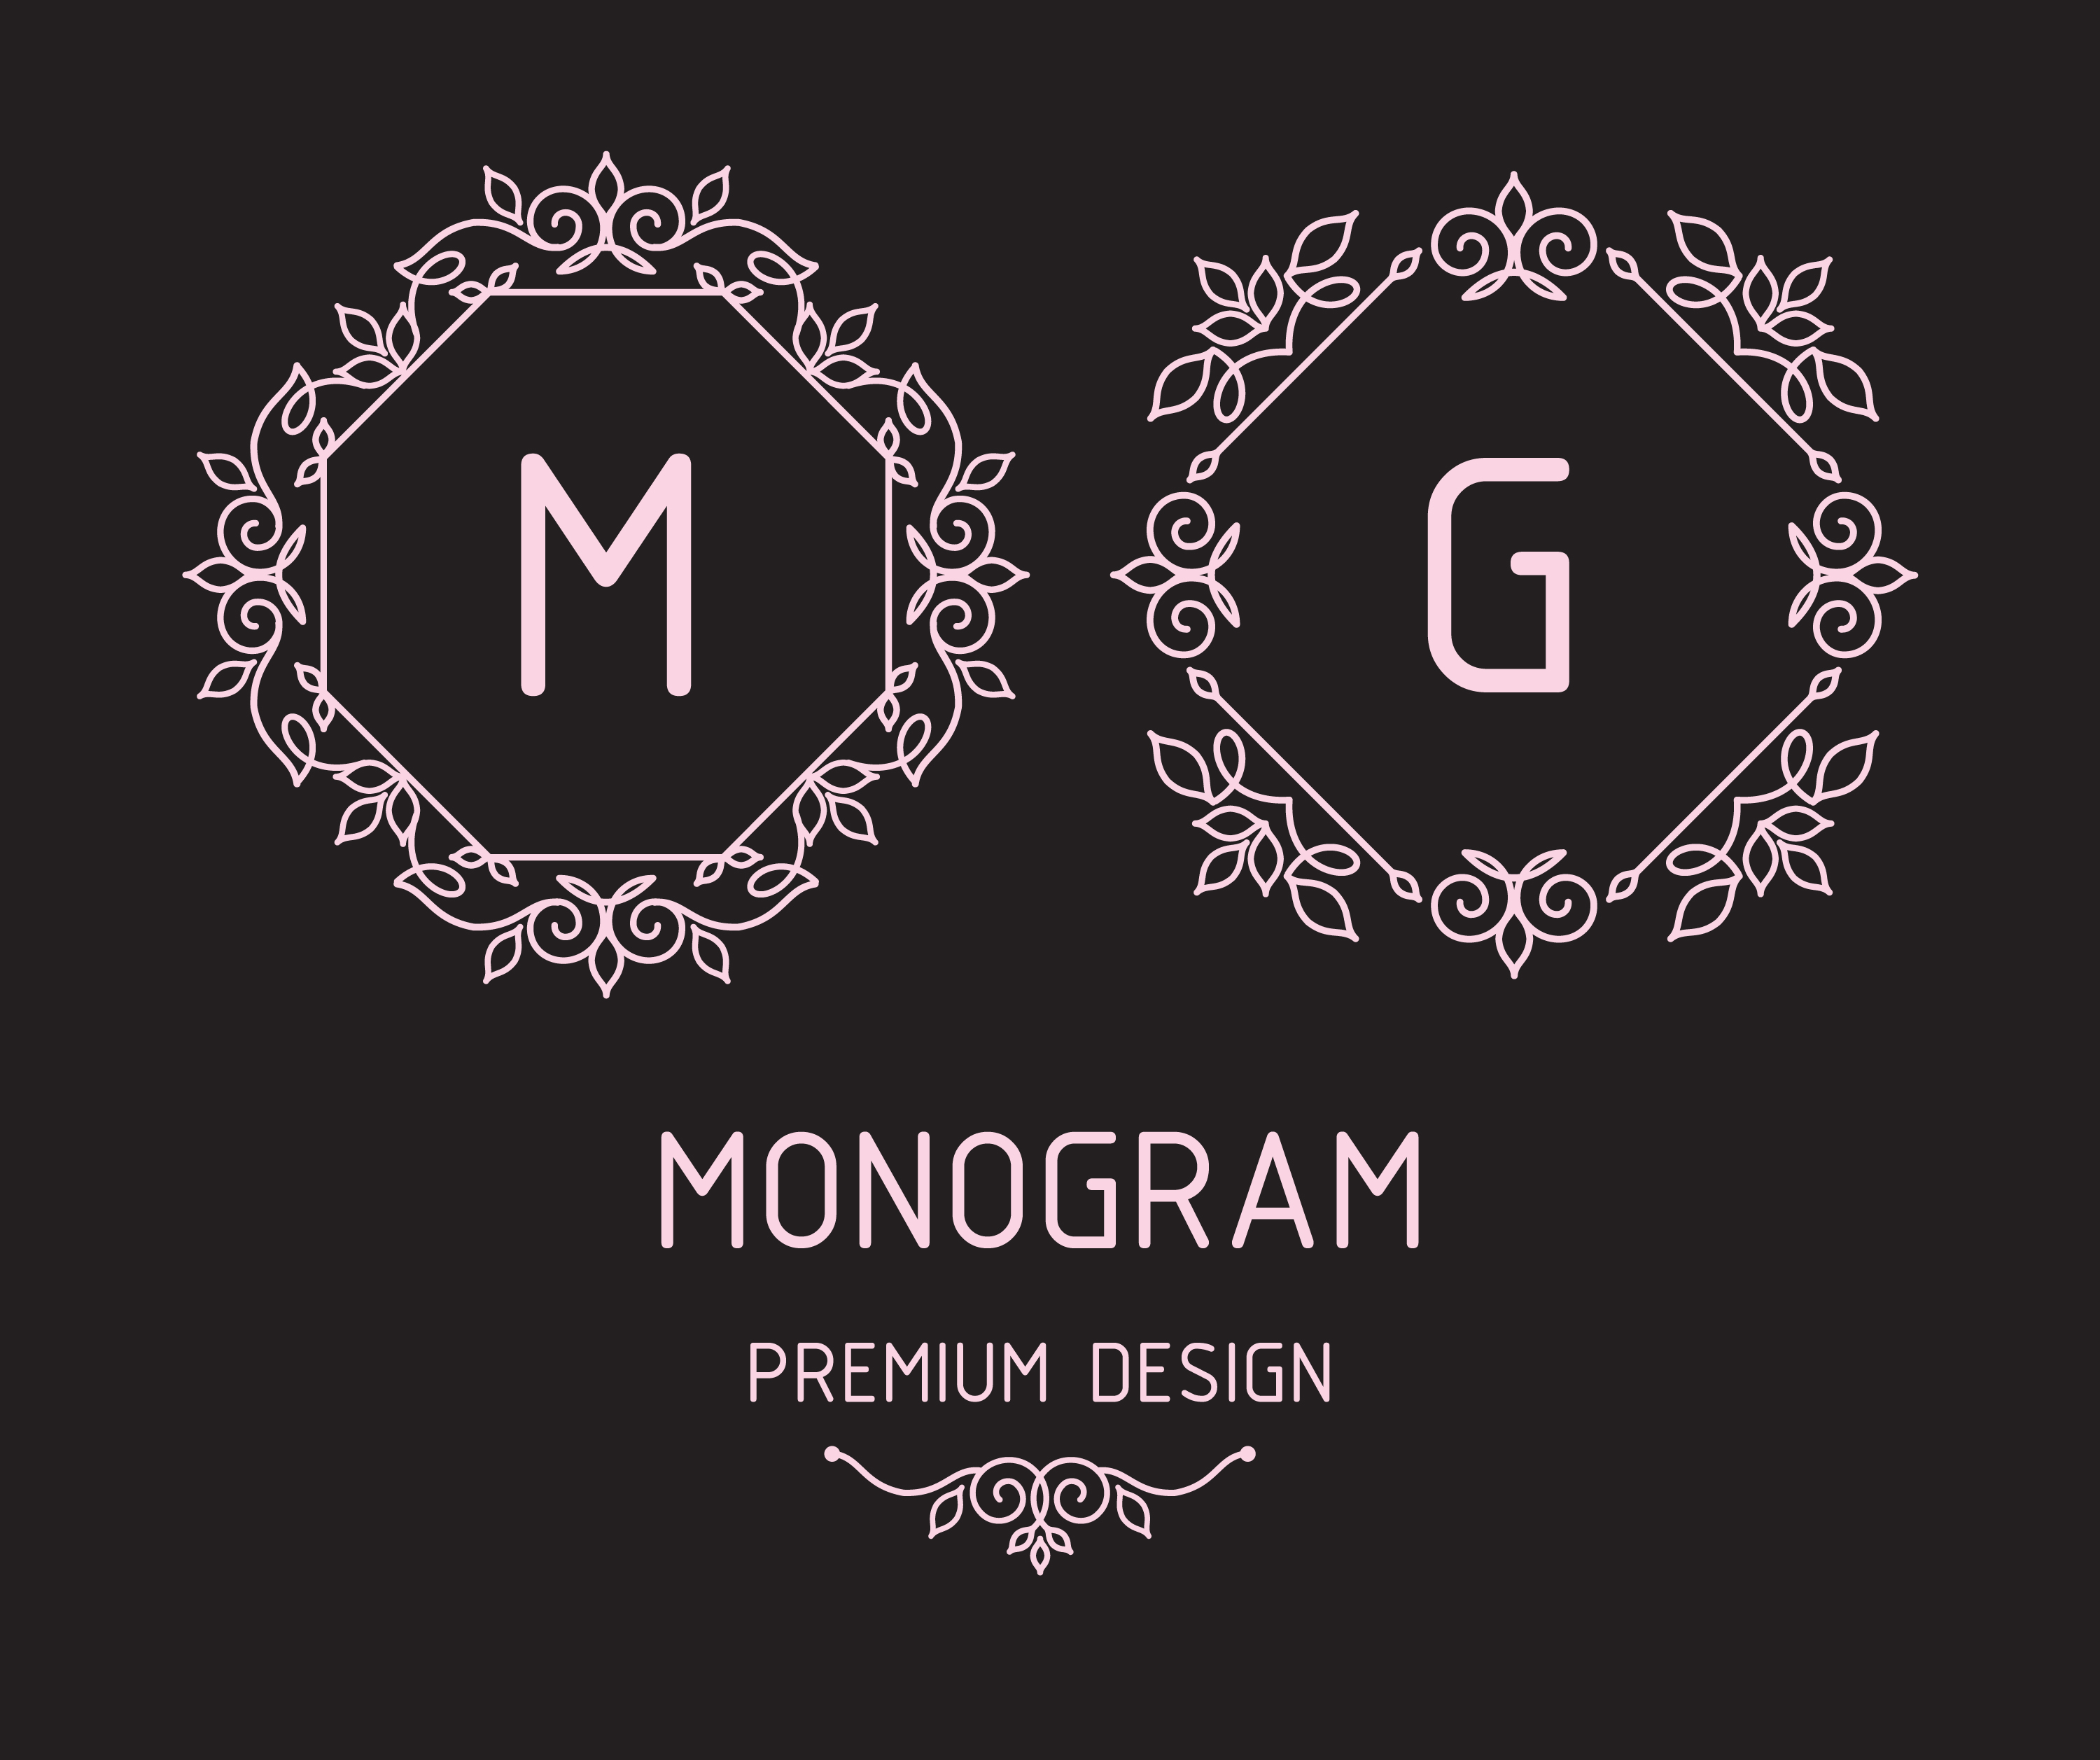 Monogram design templates Photoshop brush